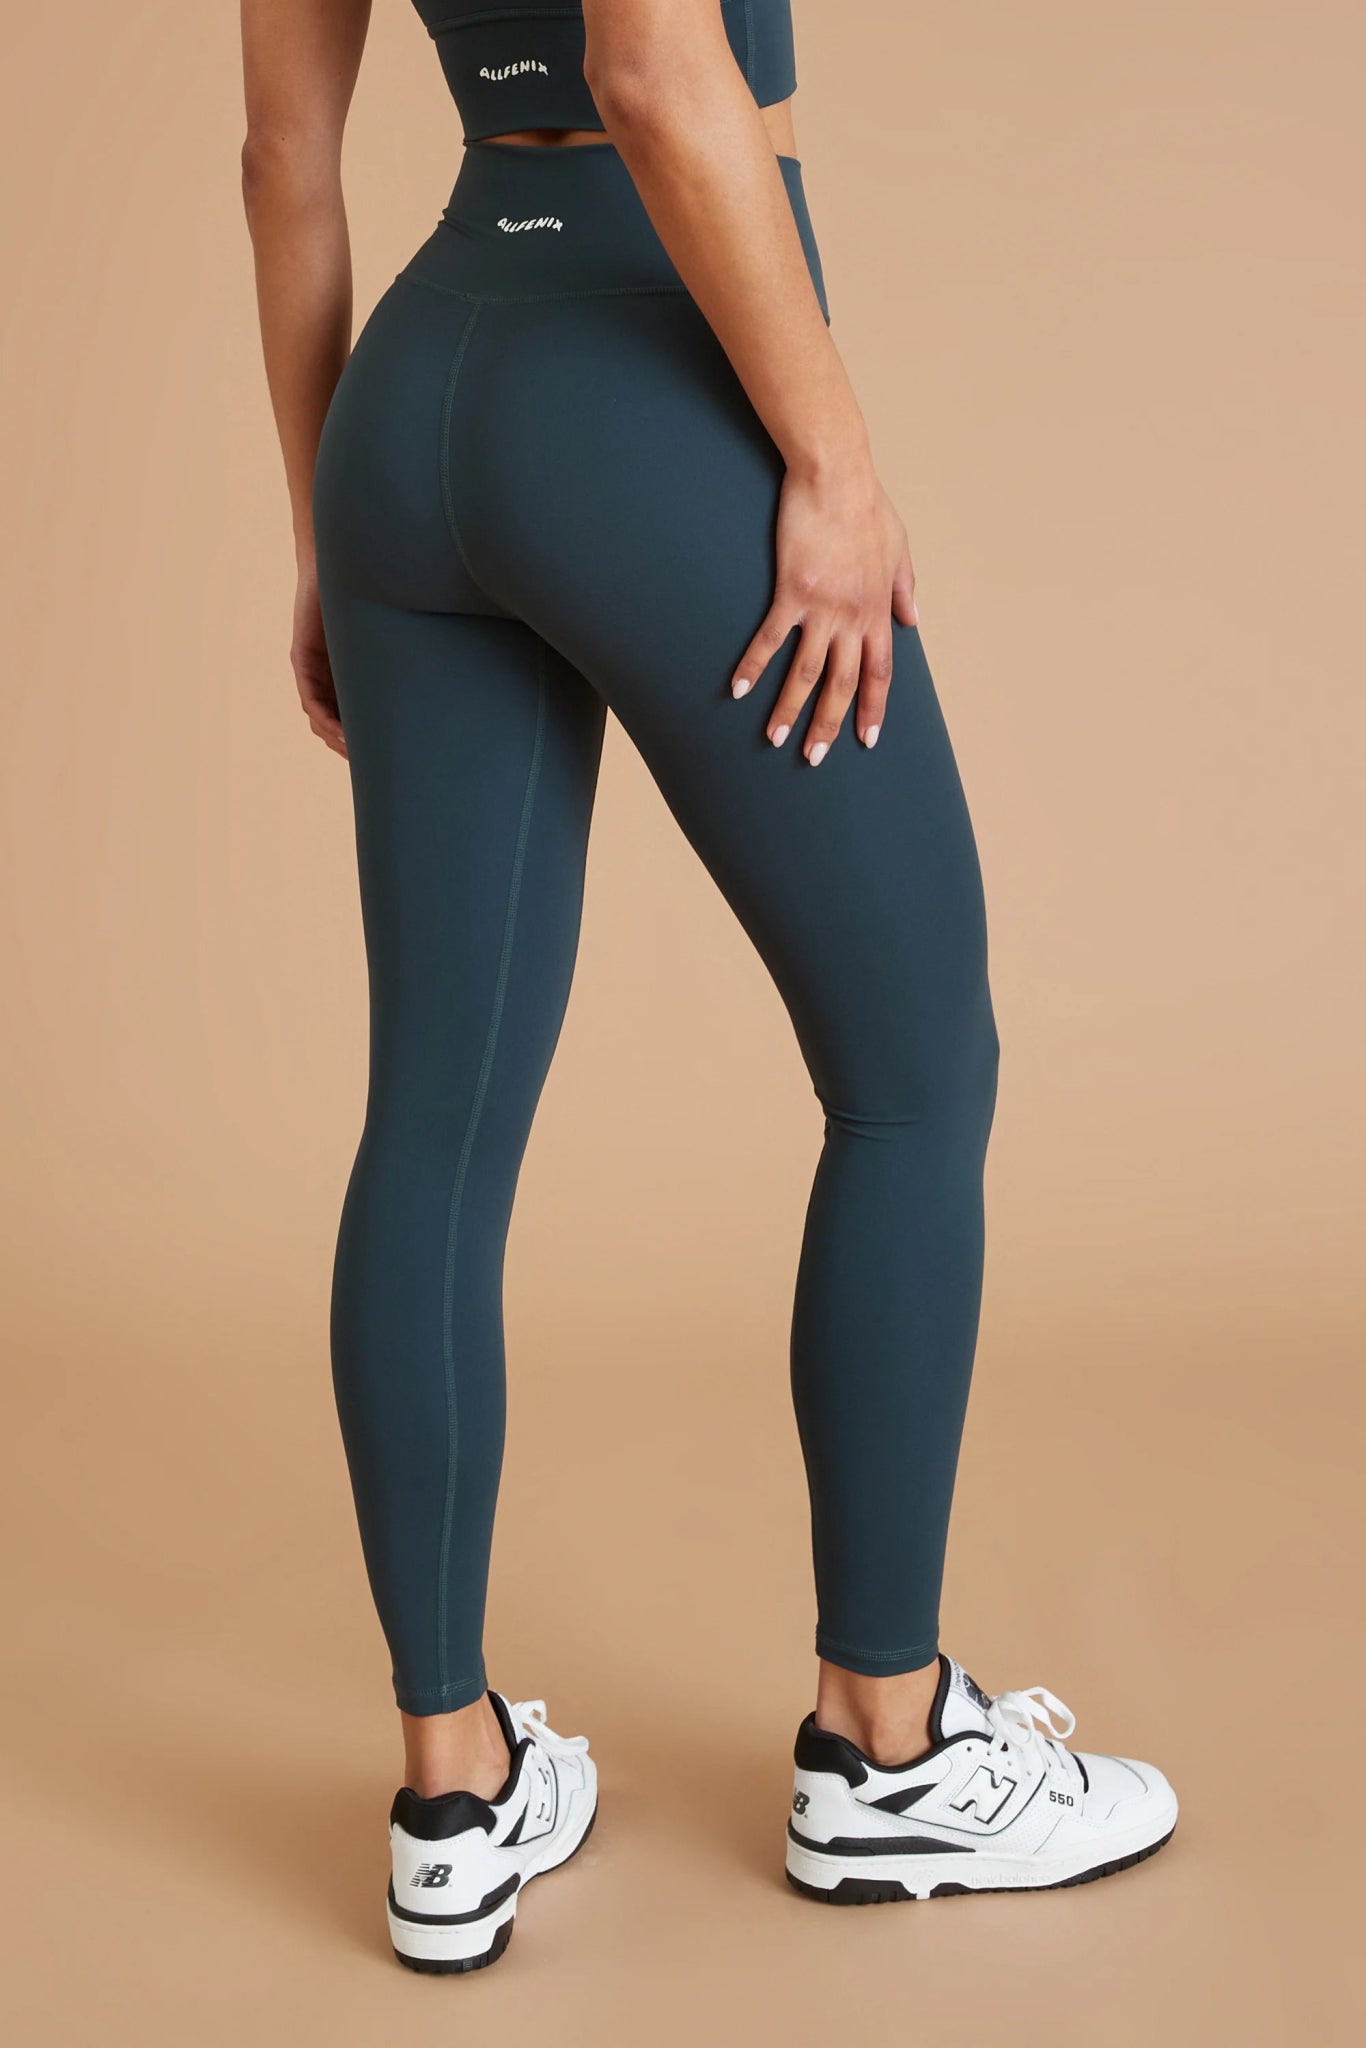 Linyuex Yoga Ladies Workout Clothes Set Yoga Wear Seamless